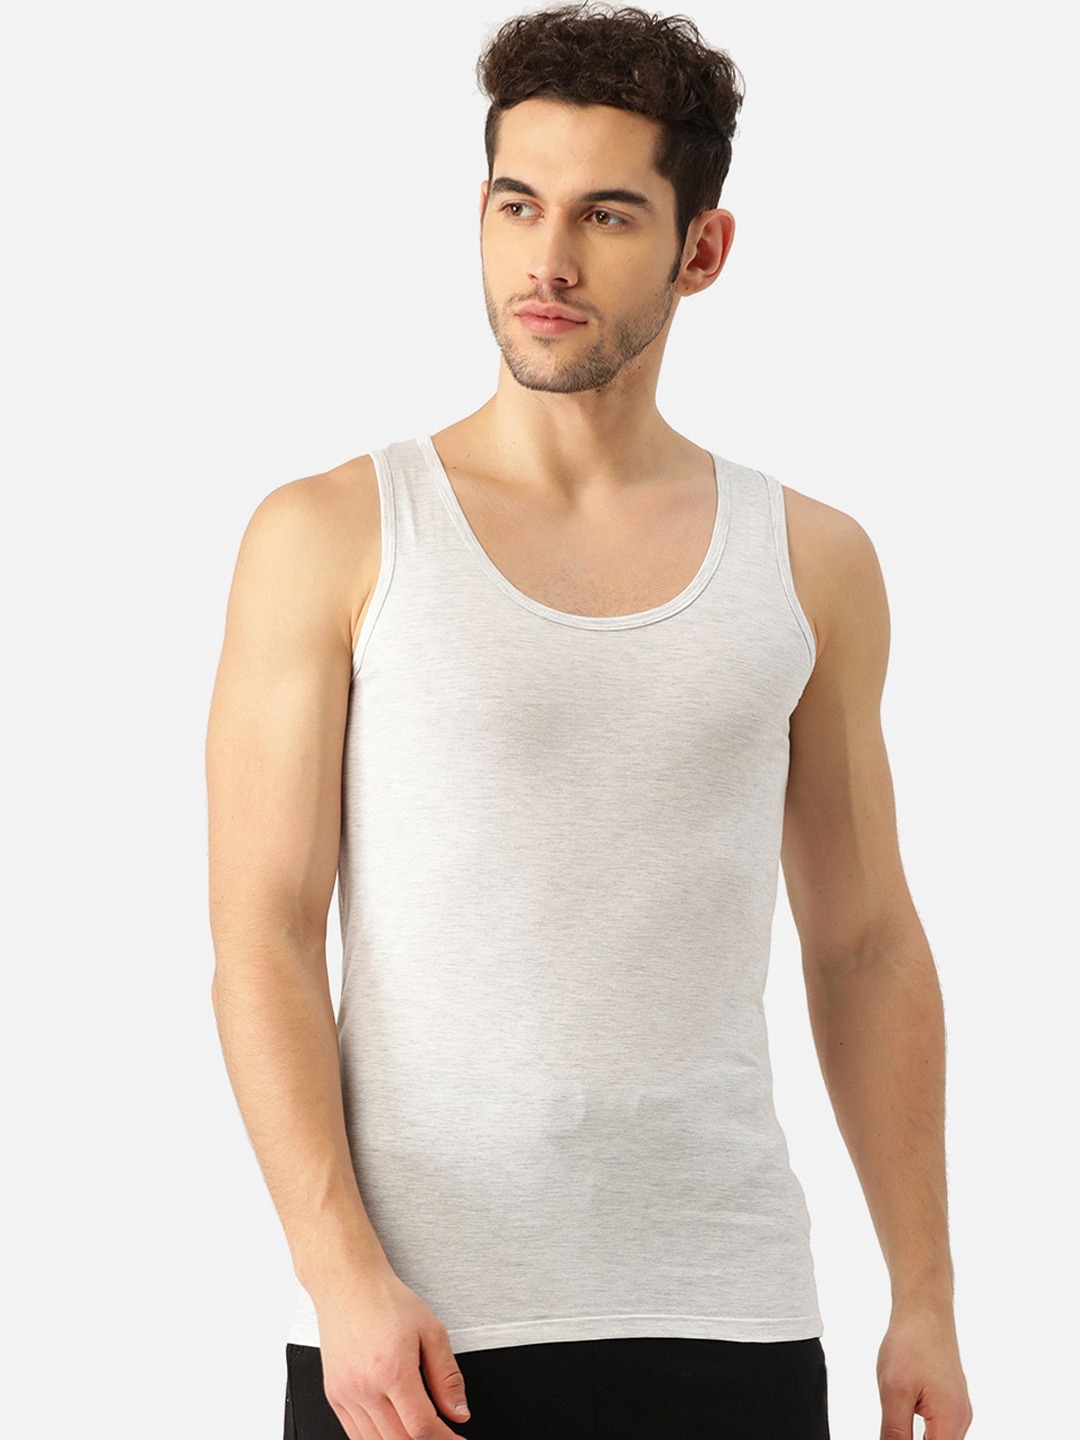 Clothing Innerwear Vests | ROMEO ROSSI Men Pack of 2 Assorted Cotton Innerwear Vests - IX16250